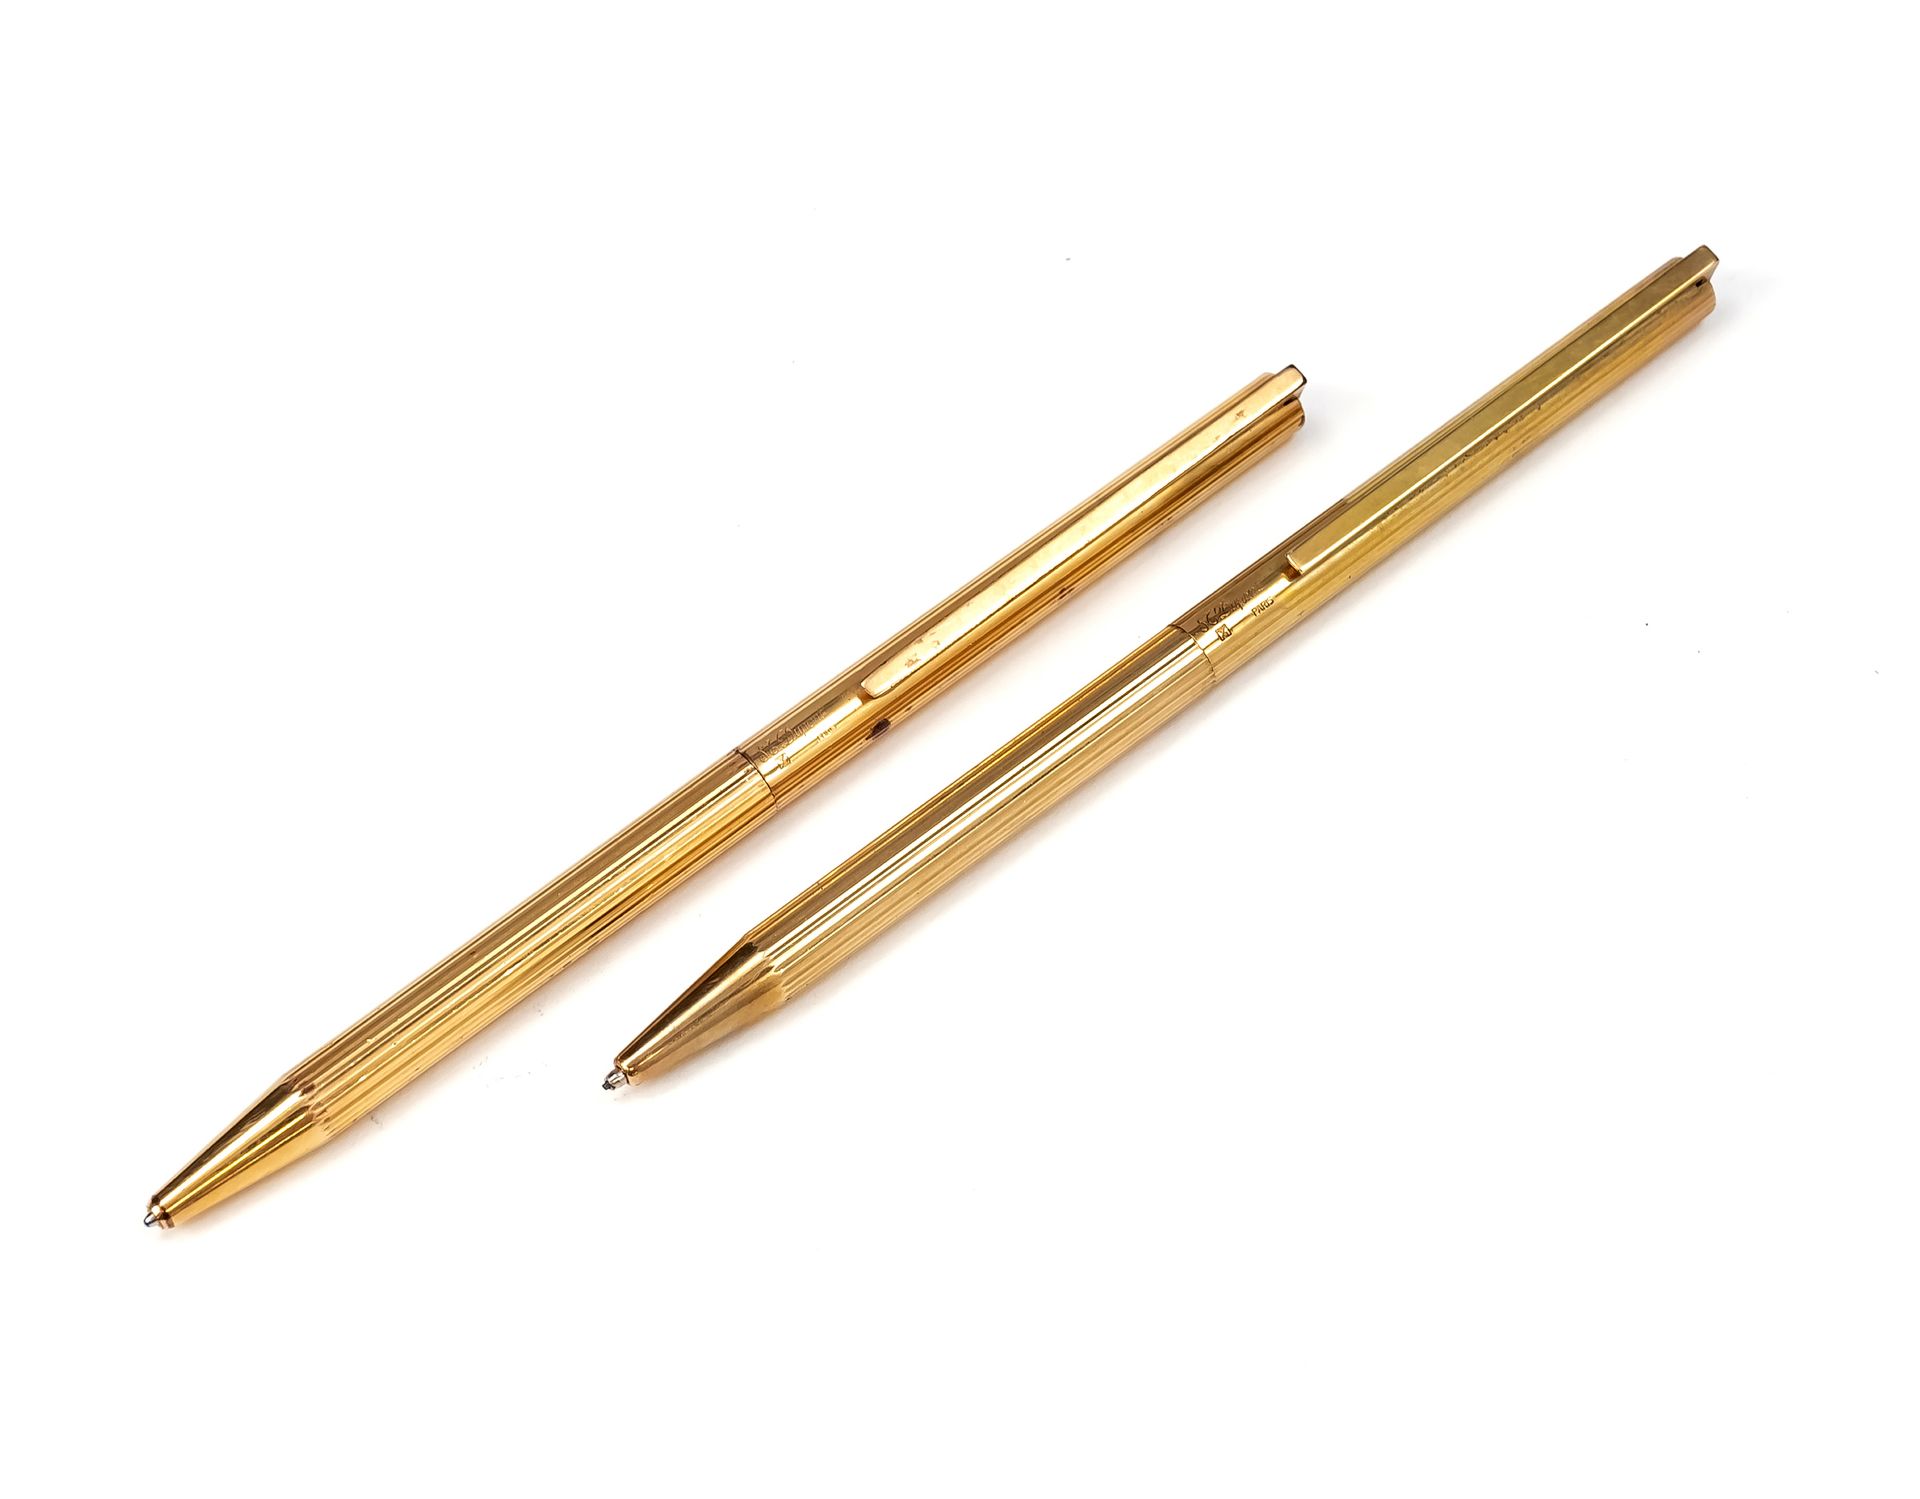 Null St. Dupont biros and propelling pencil, 20世纪下半叶，每个都有镀金的外壳，条状雕刻，1个线头损坏，长13.5&hellip;